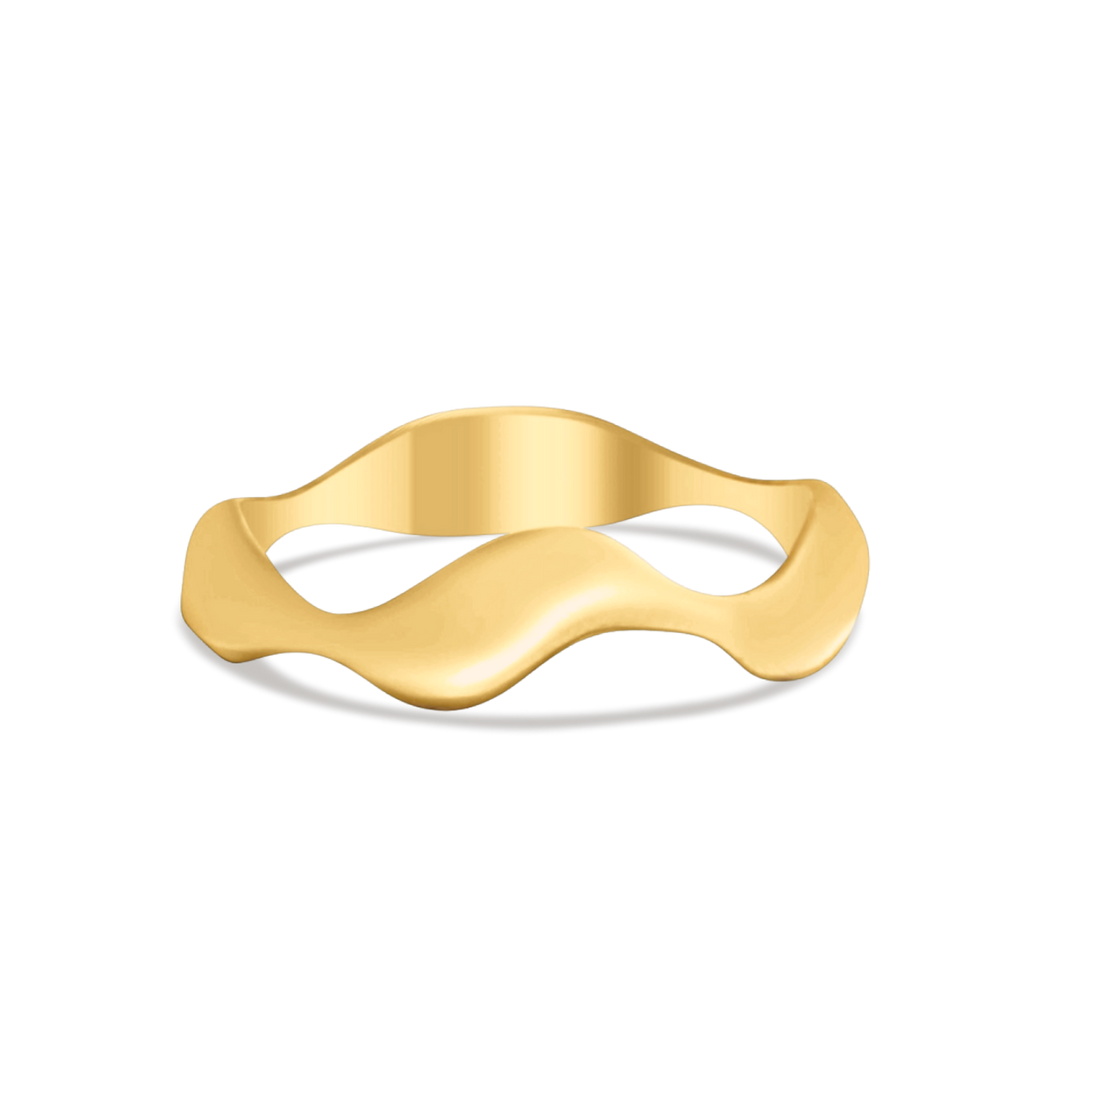 wavy gold ring toronto, 10k wavy ring canada, gold ring 10k, 10k gold ring woman